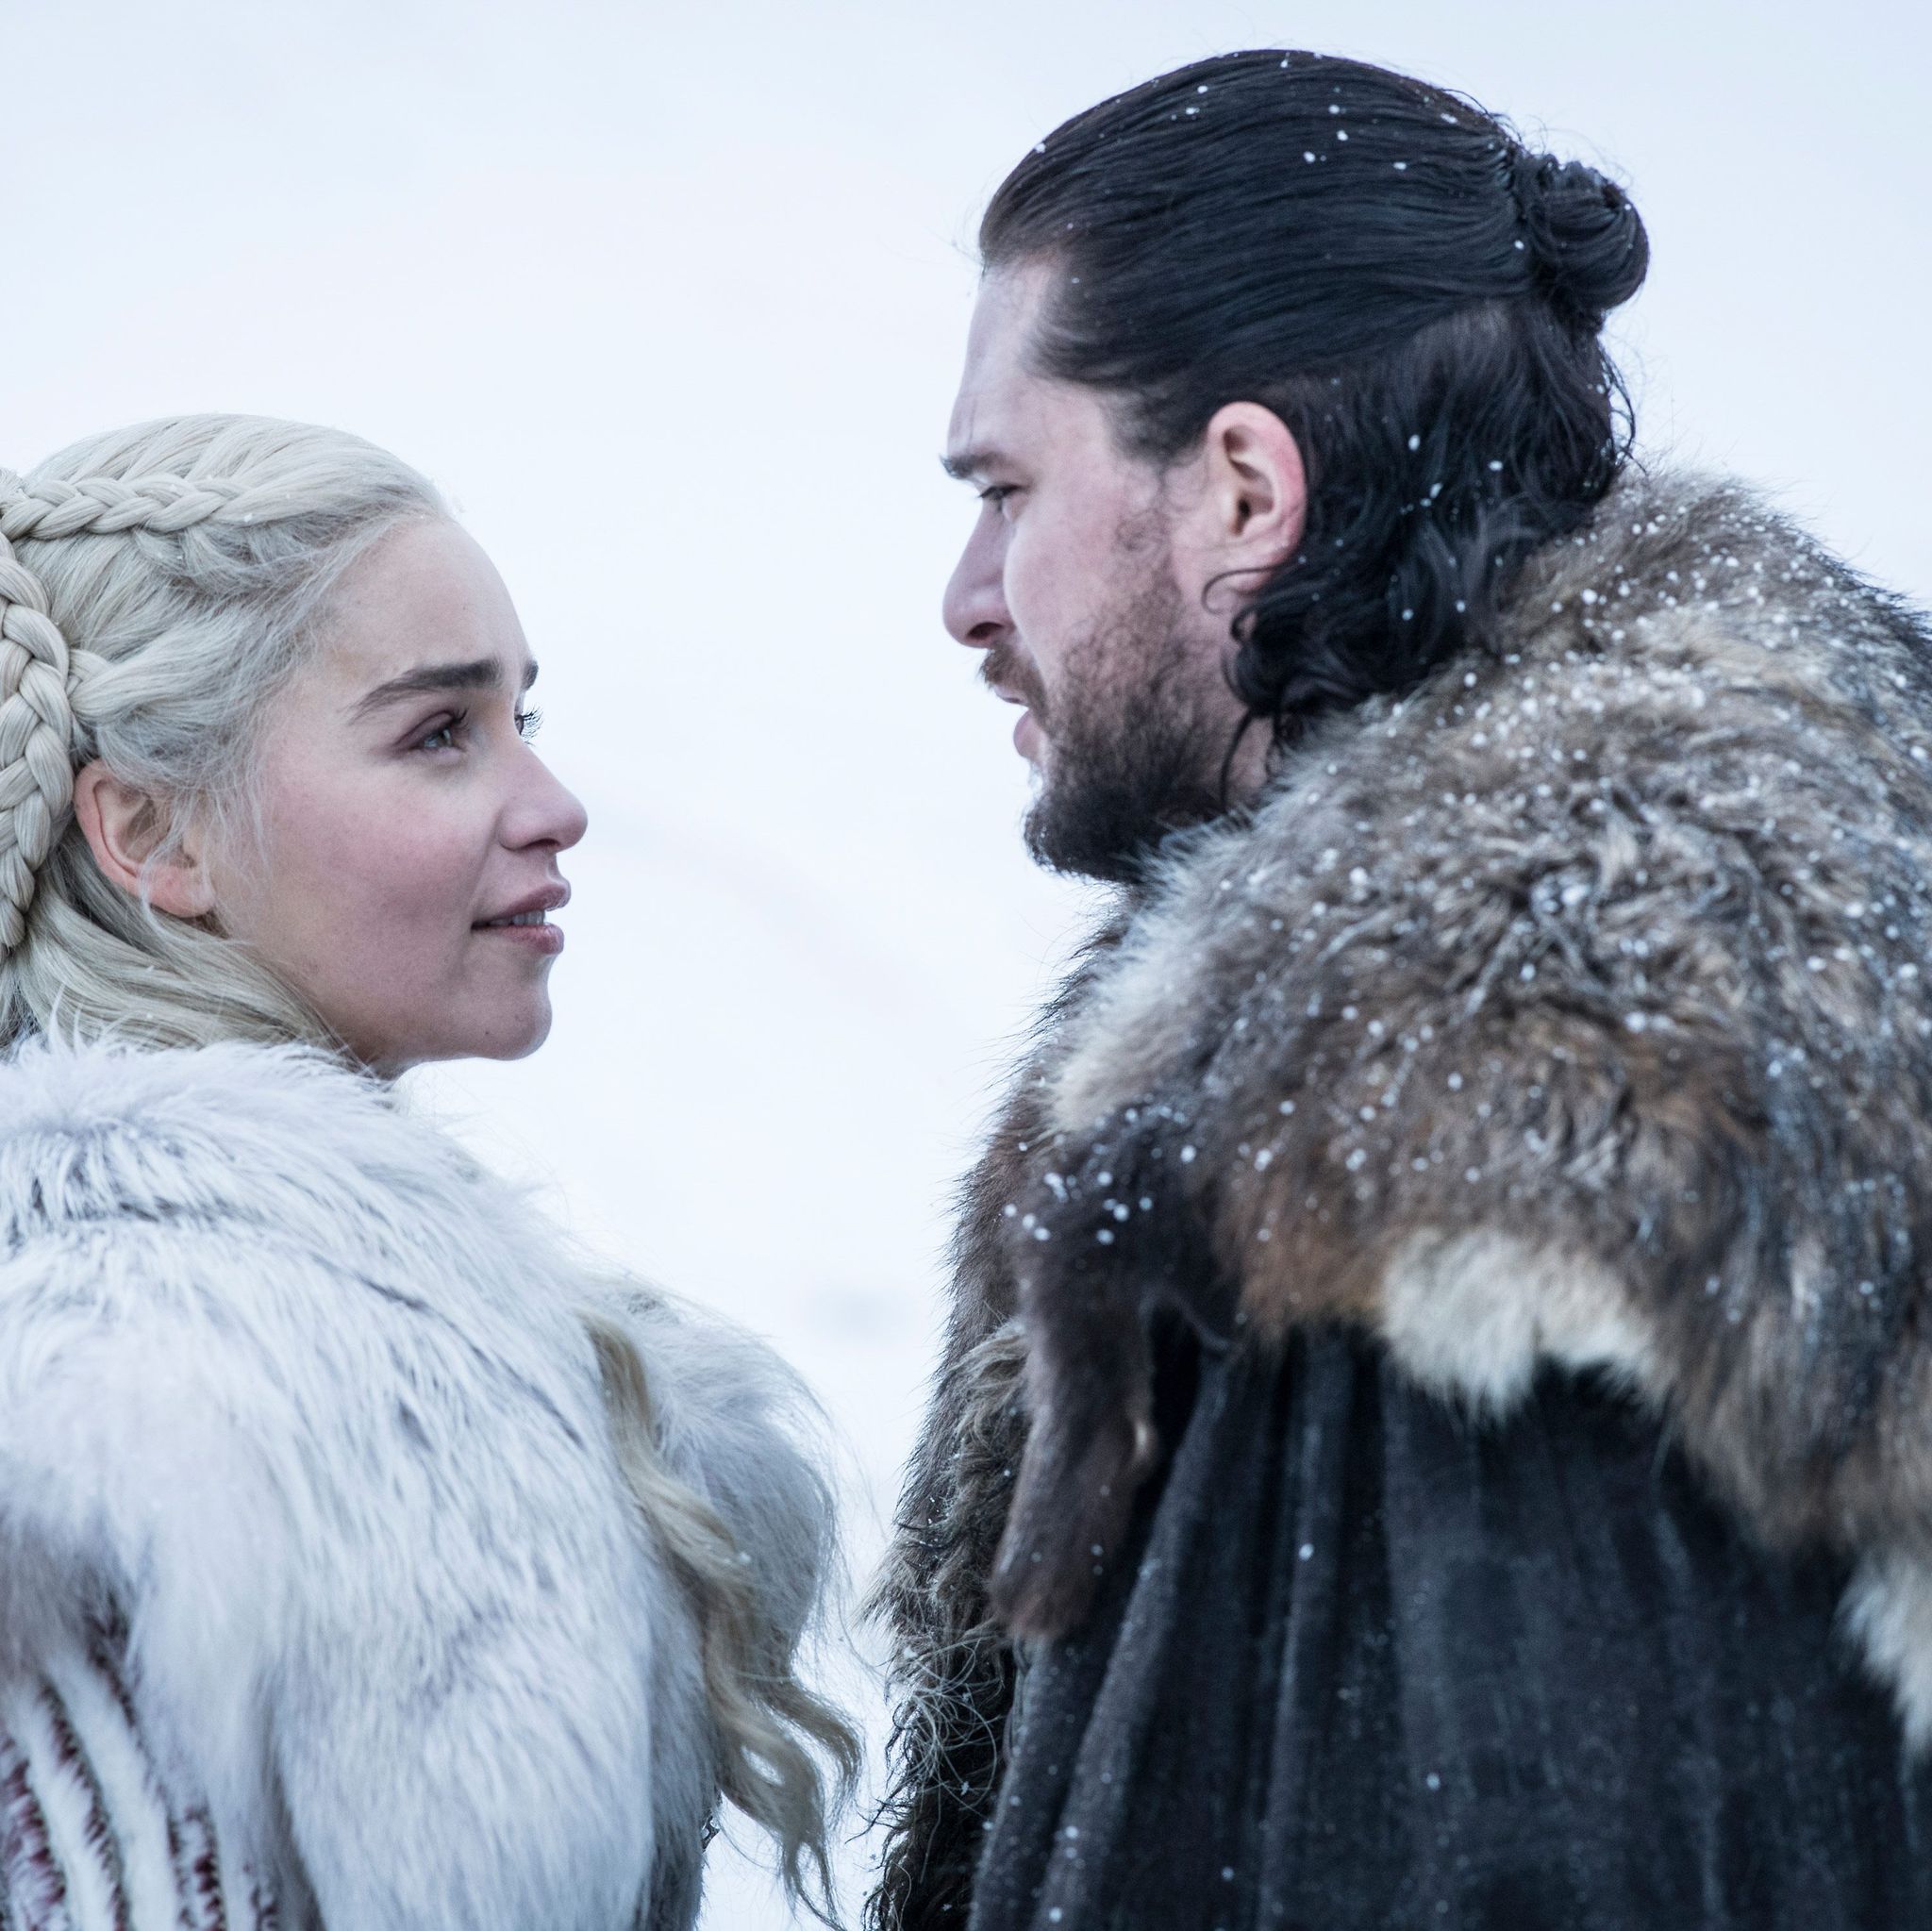 Game of Thrones: Season 1 - Critics Trailer (HBO) 